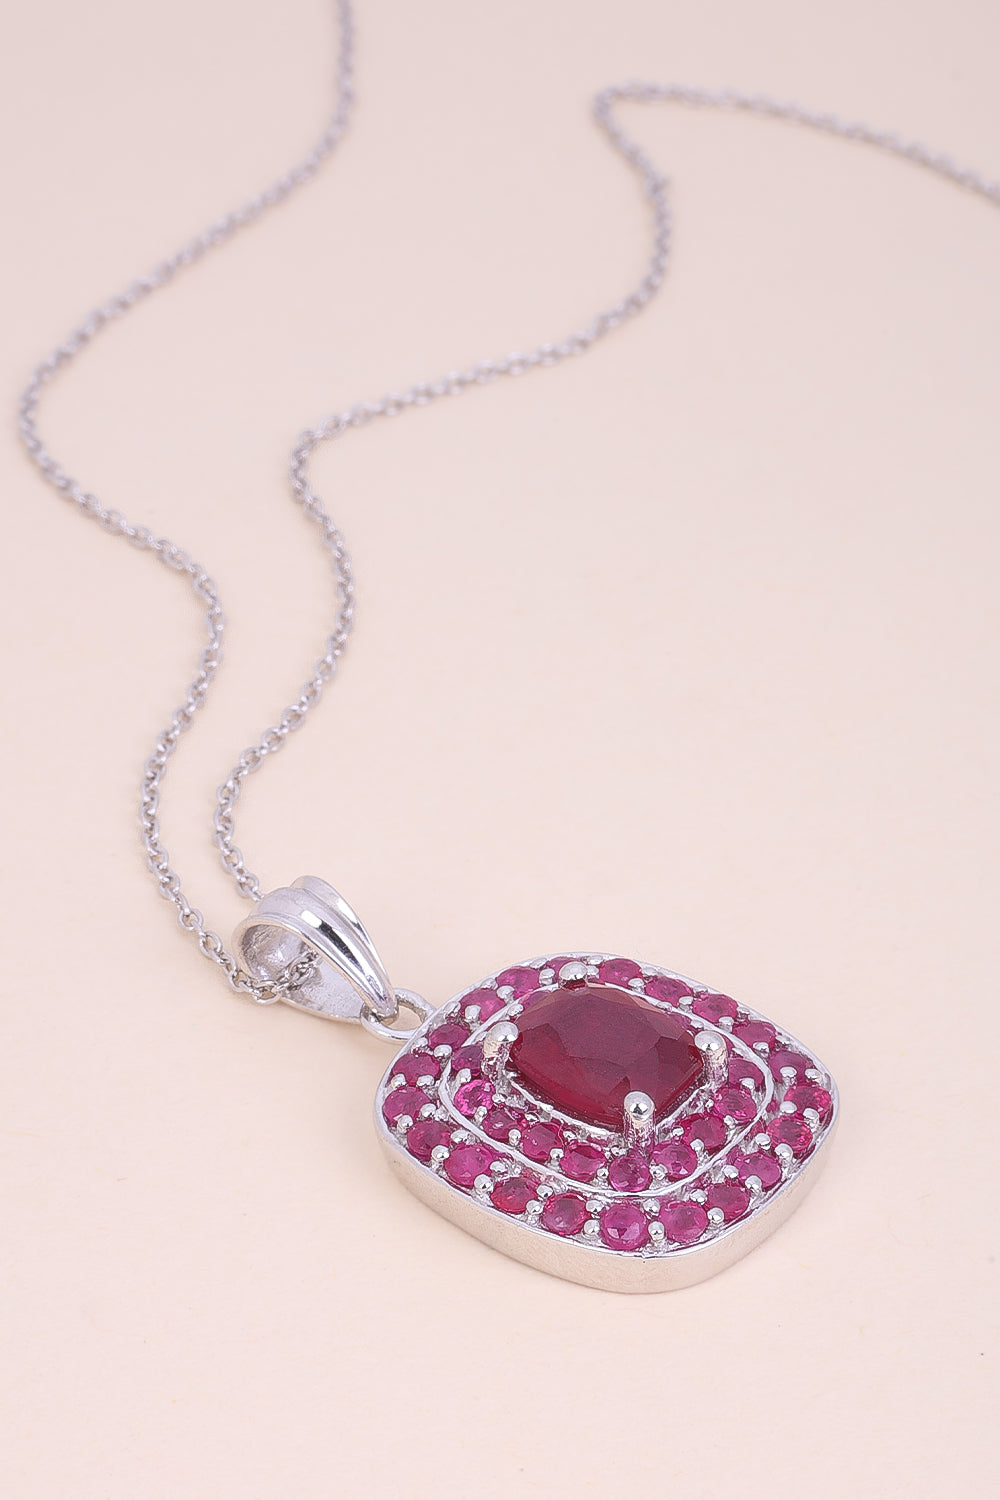 Ruby Silver Necklace Pendant Chain-Avishya